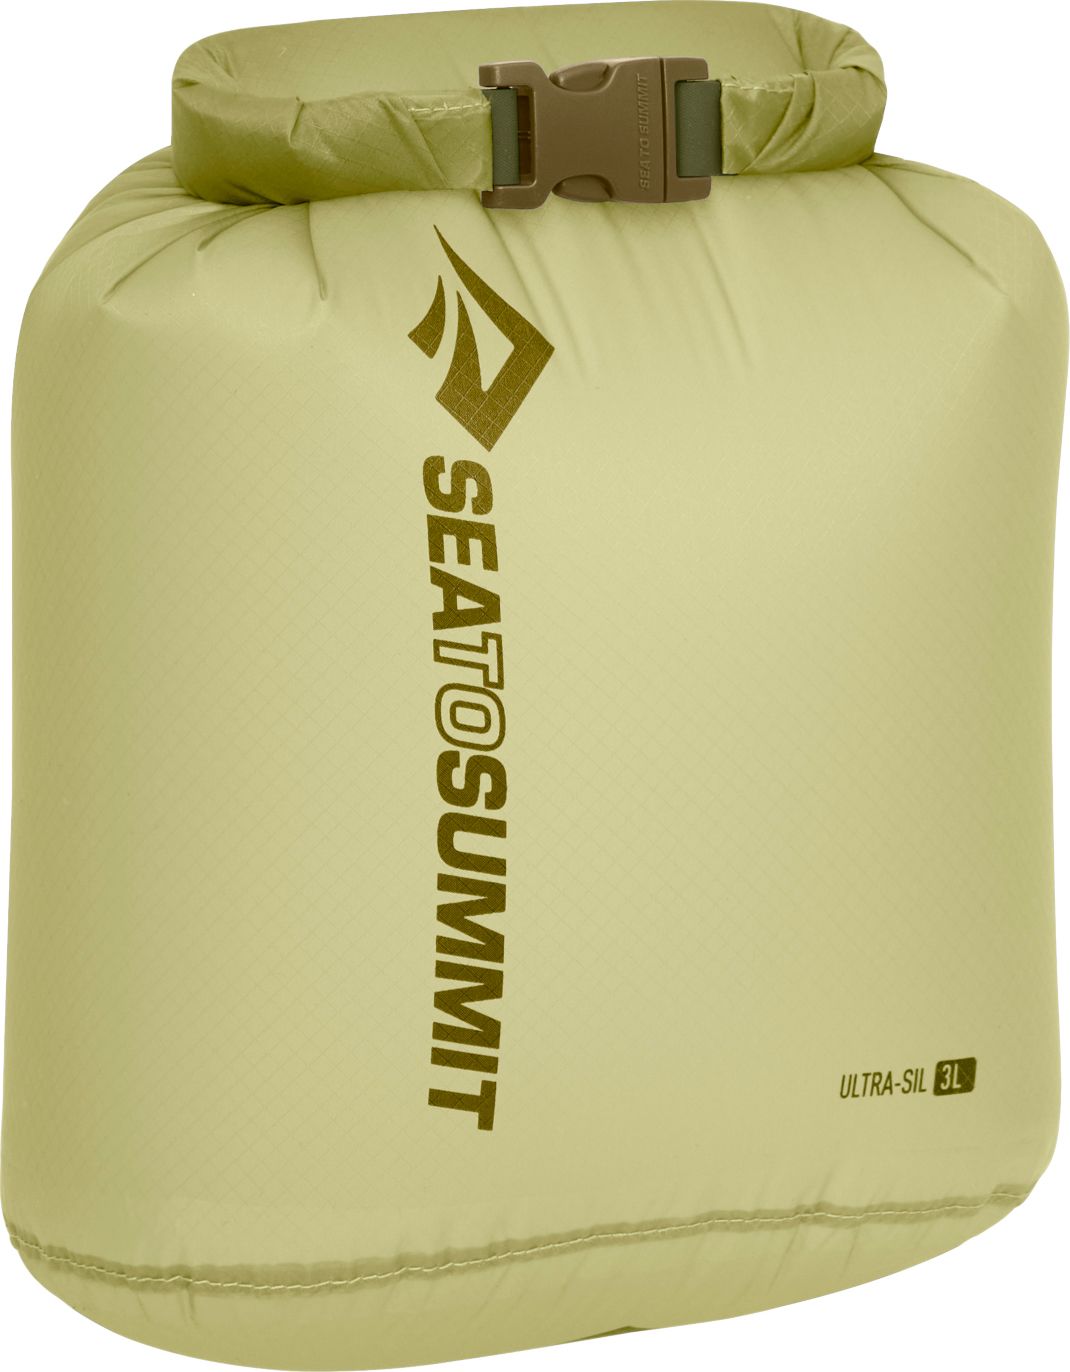 Ultra-Sil Dry Bag Eco 3L TARRAGON